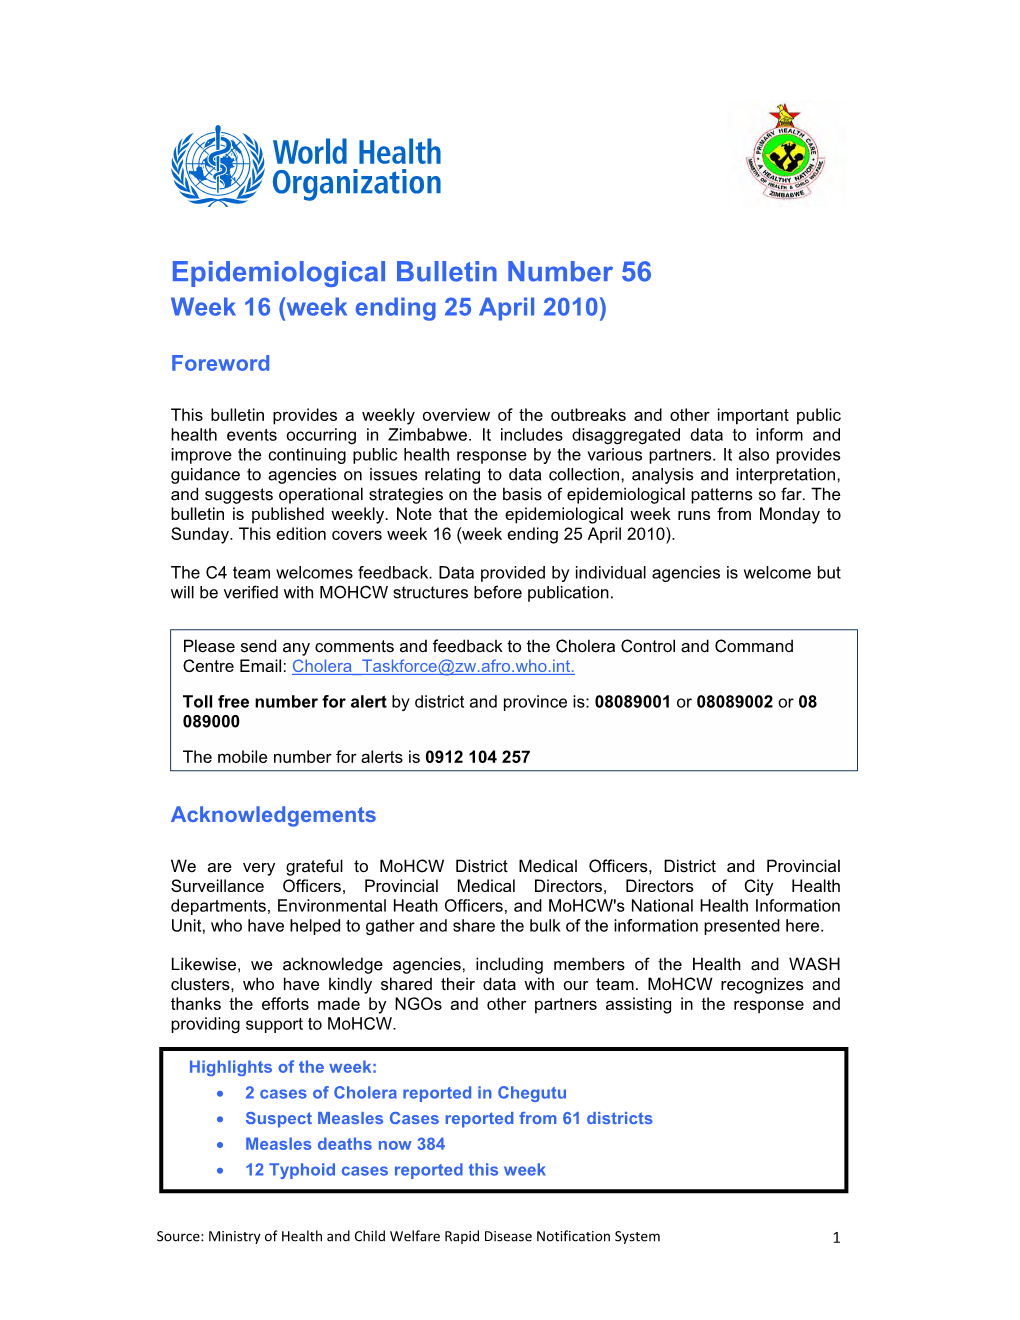 Epidemiological Bulletin Number 56 Week 16 (Week Ending 25 April 2010)